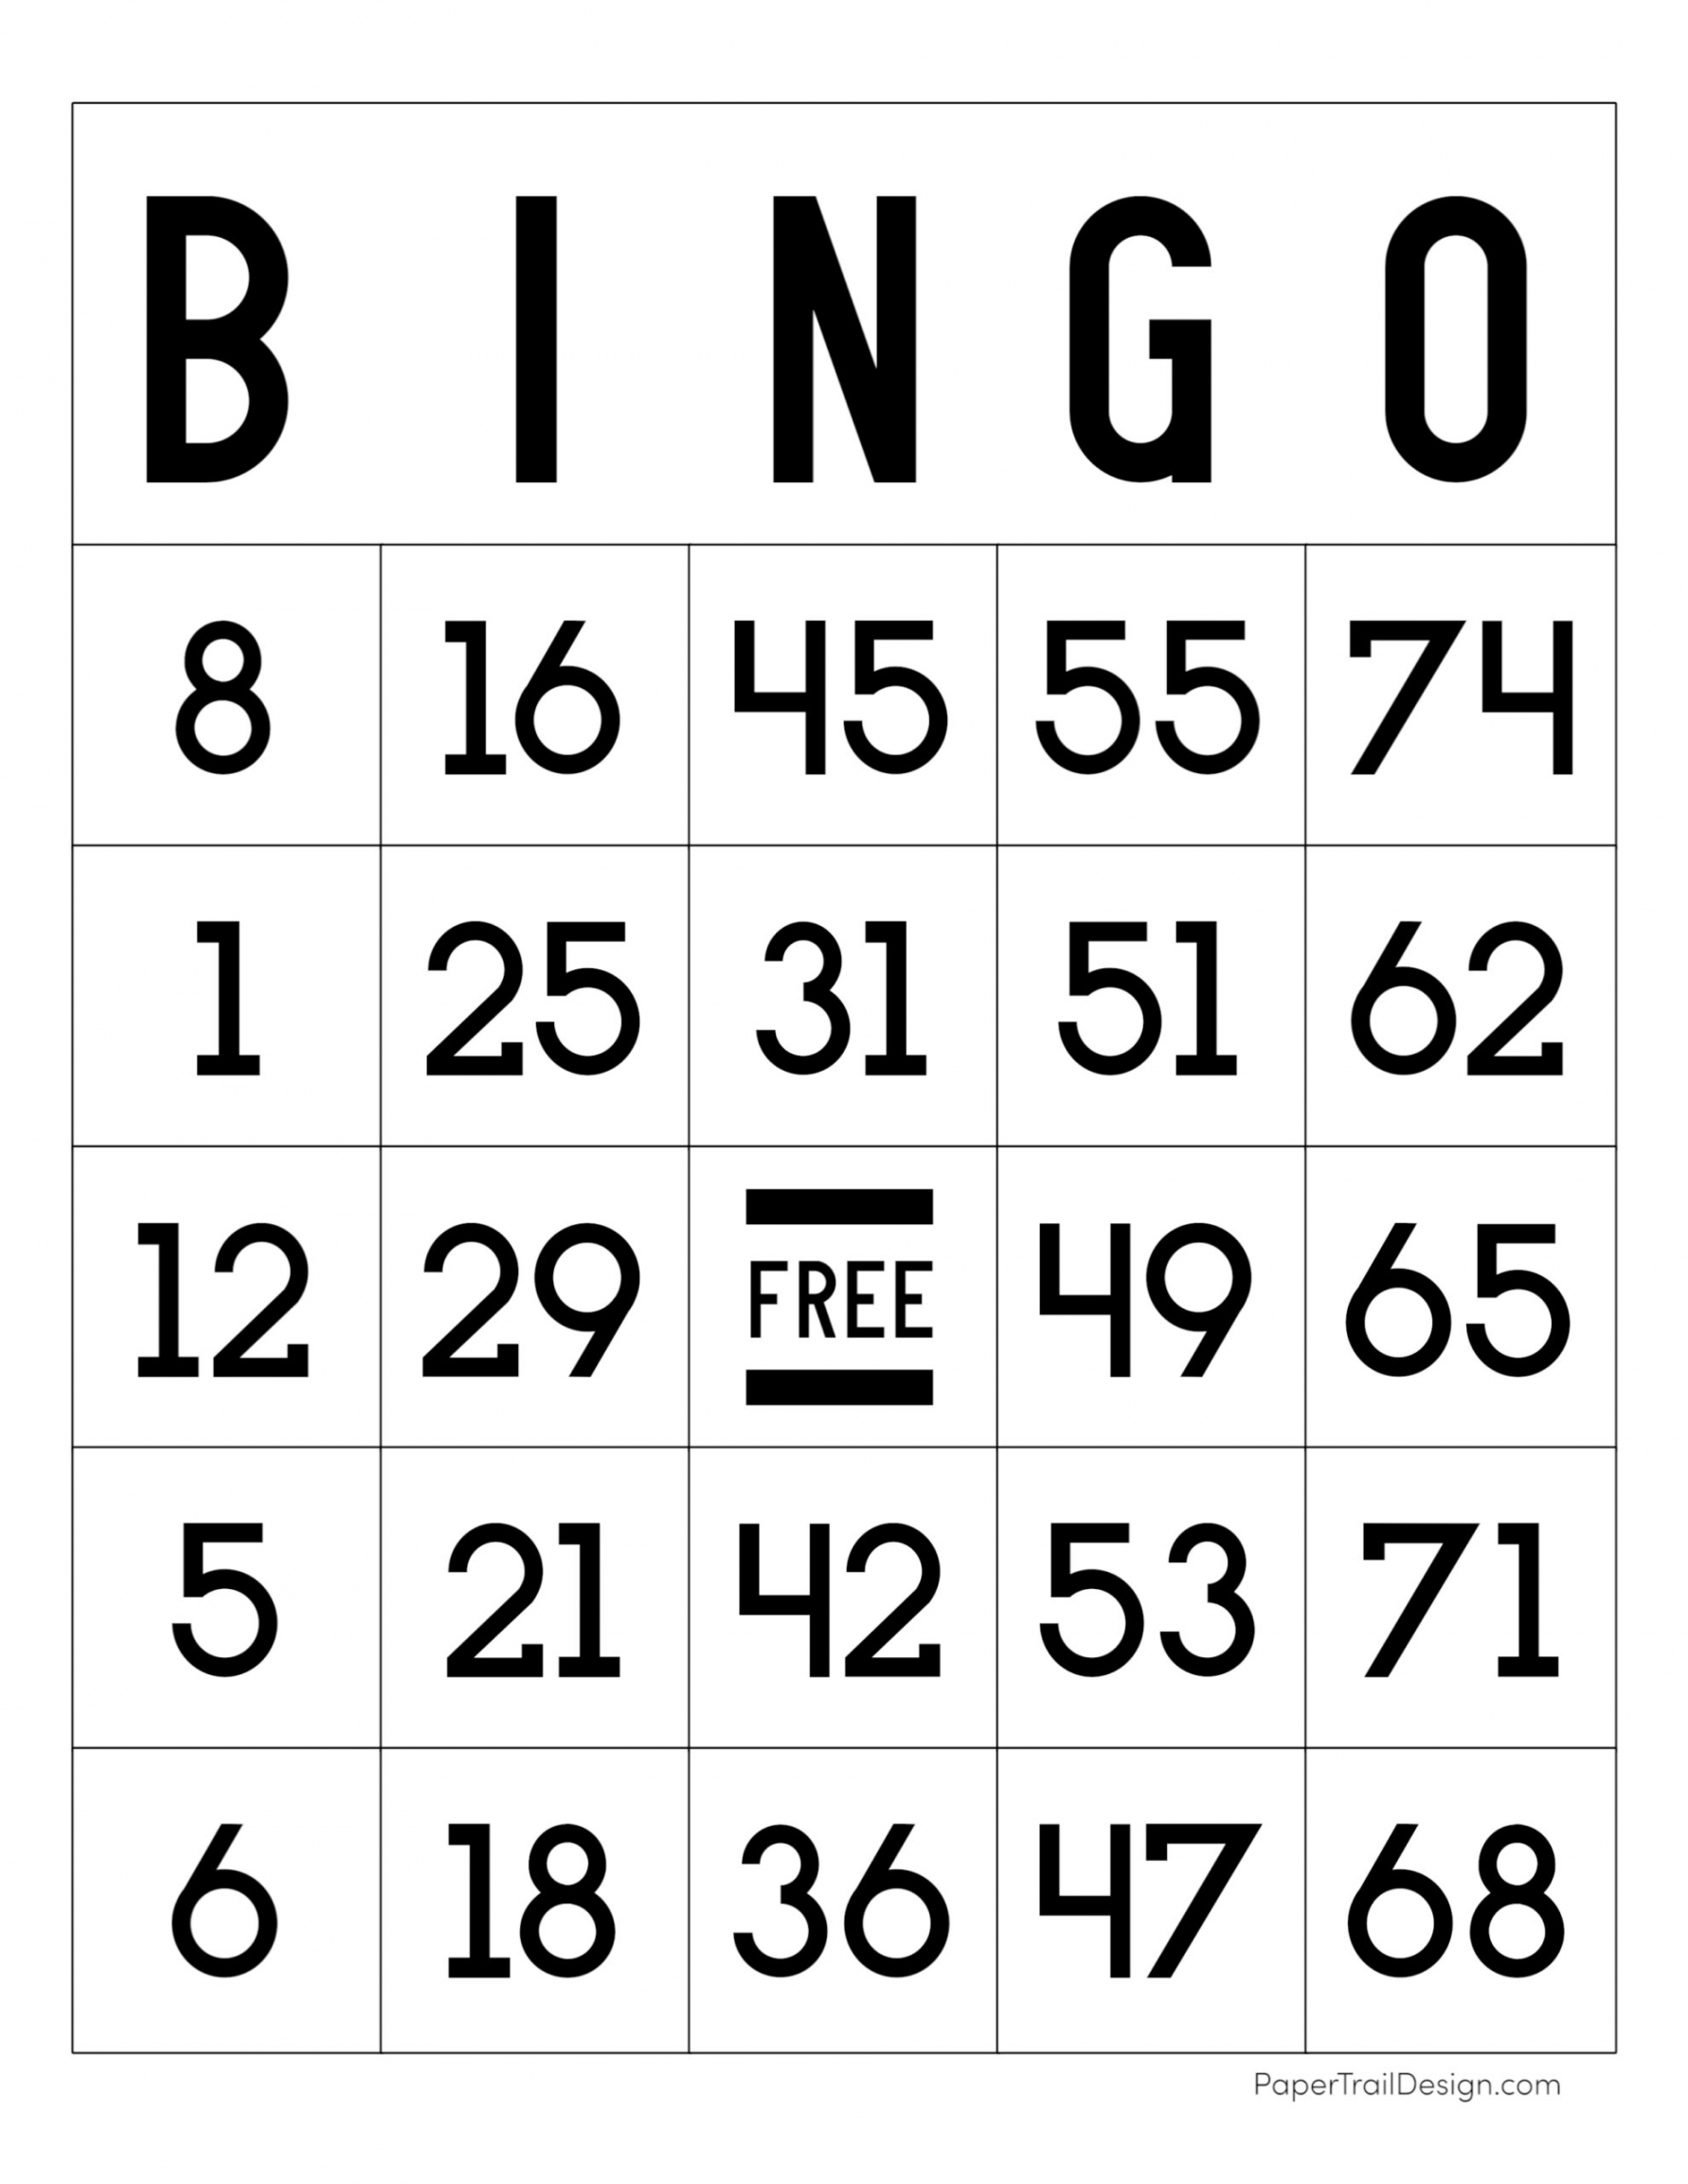 Free Printable Bingo Cards - Printable - Free Printable Bingo Cards - Paper Trail Design